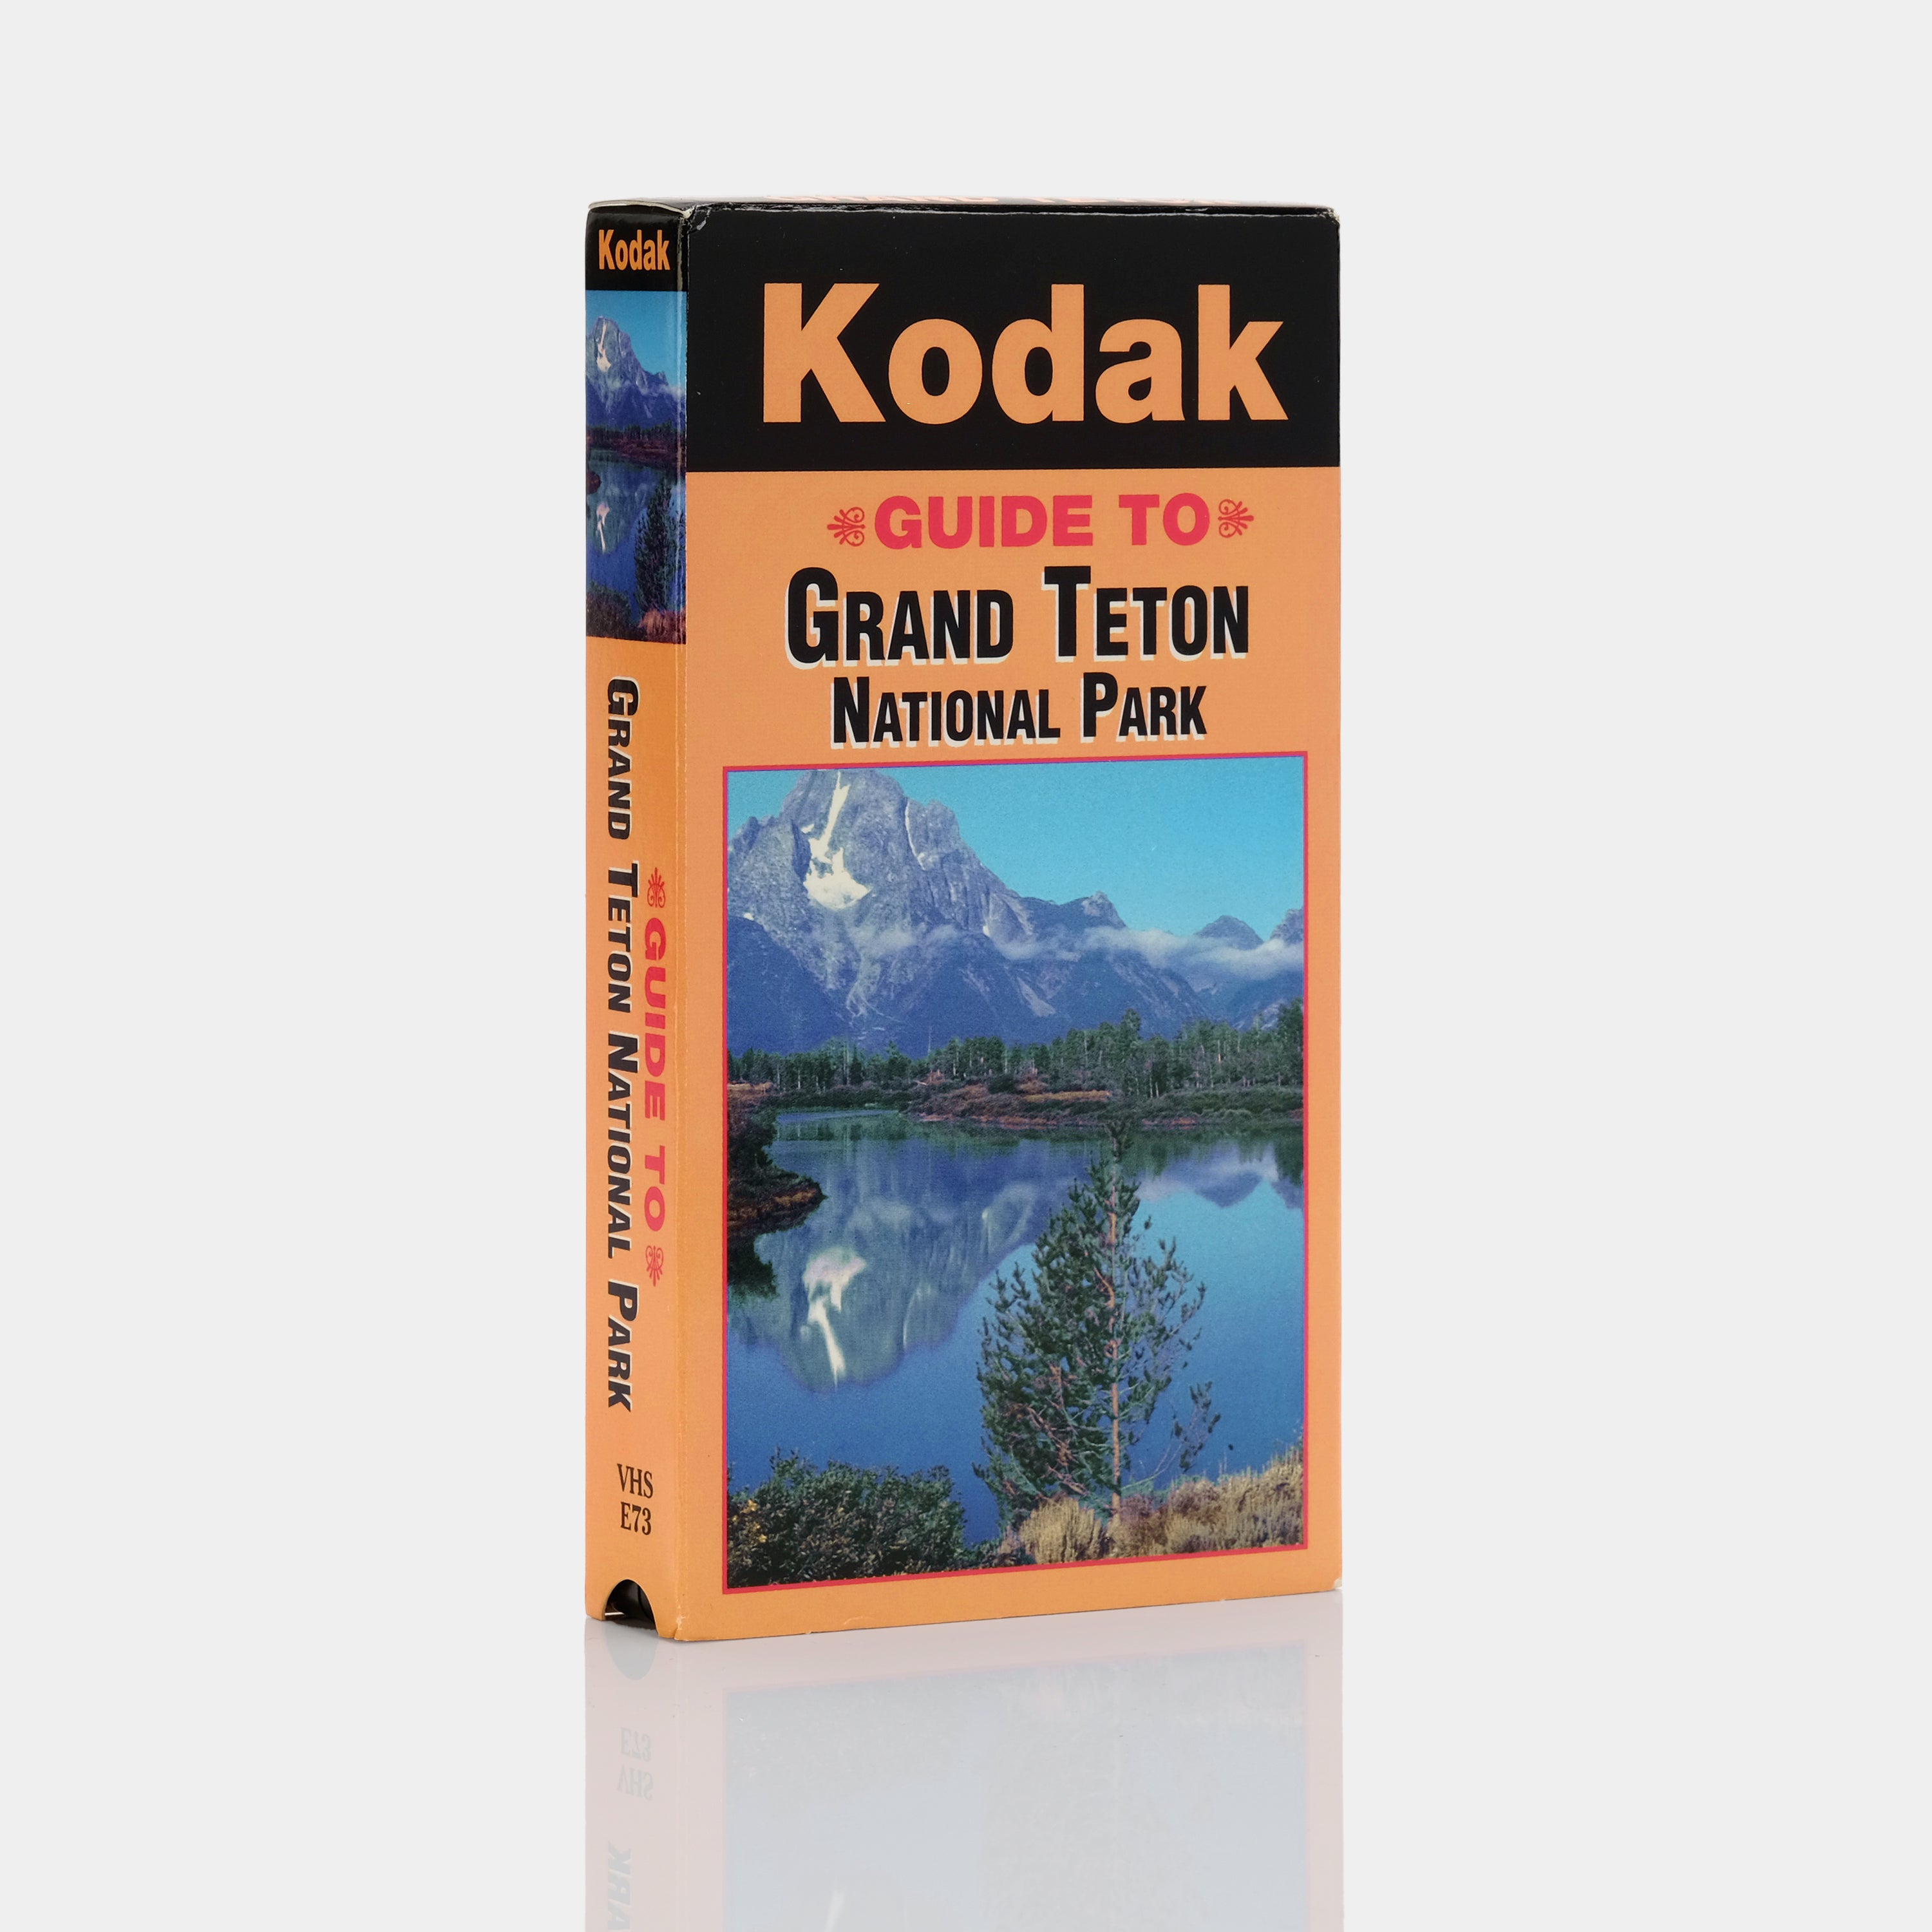 Kodak: Guide To Grand Teton National Park VHS Tape